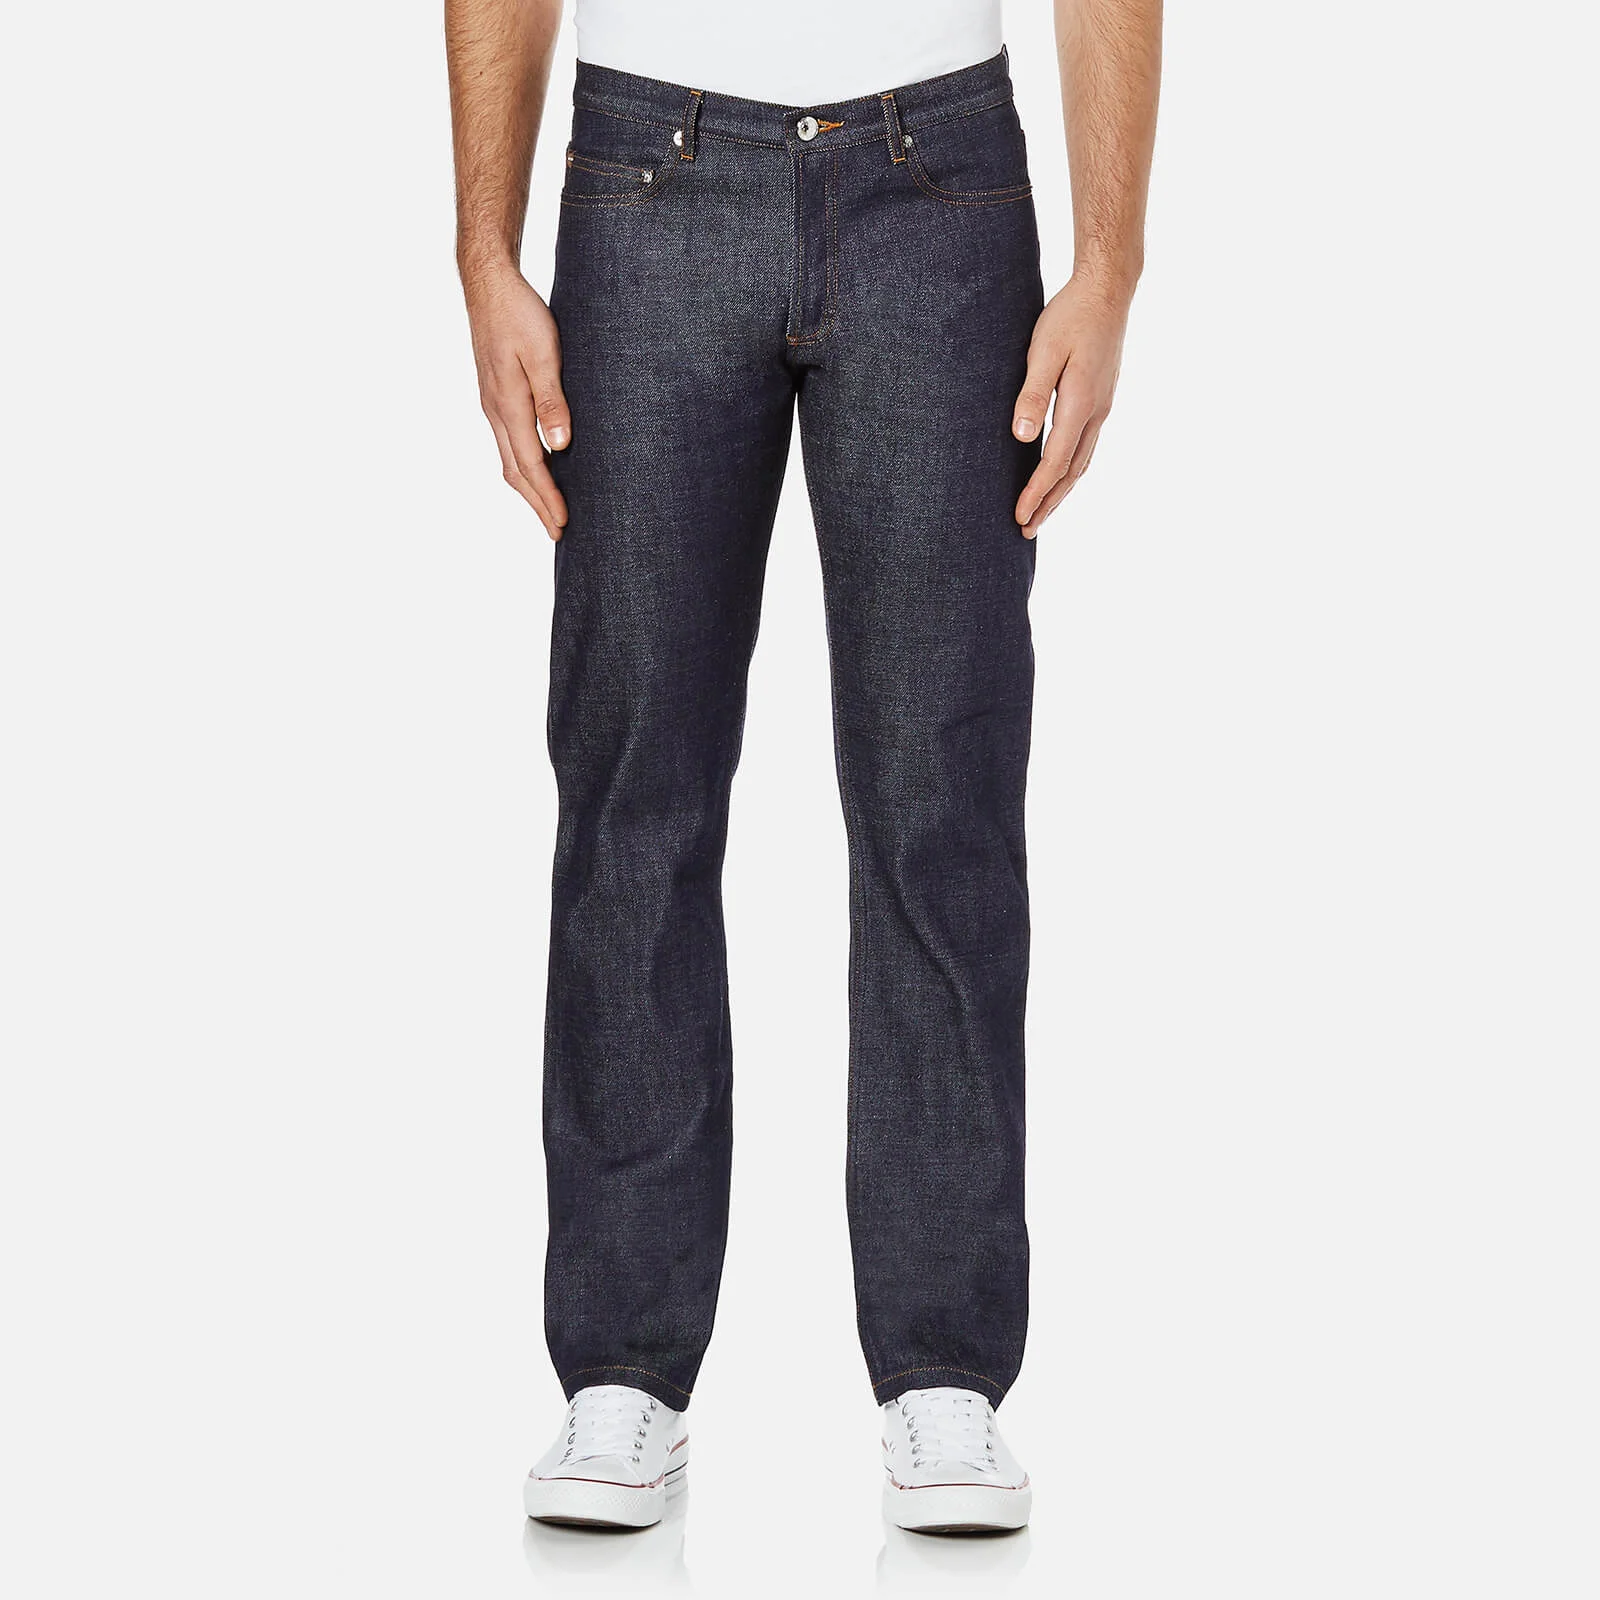 A.P.C. Men's New Standard Mid Rise Jeans - Selvedge Indigo Image 1